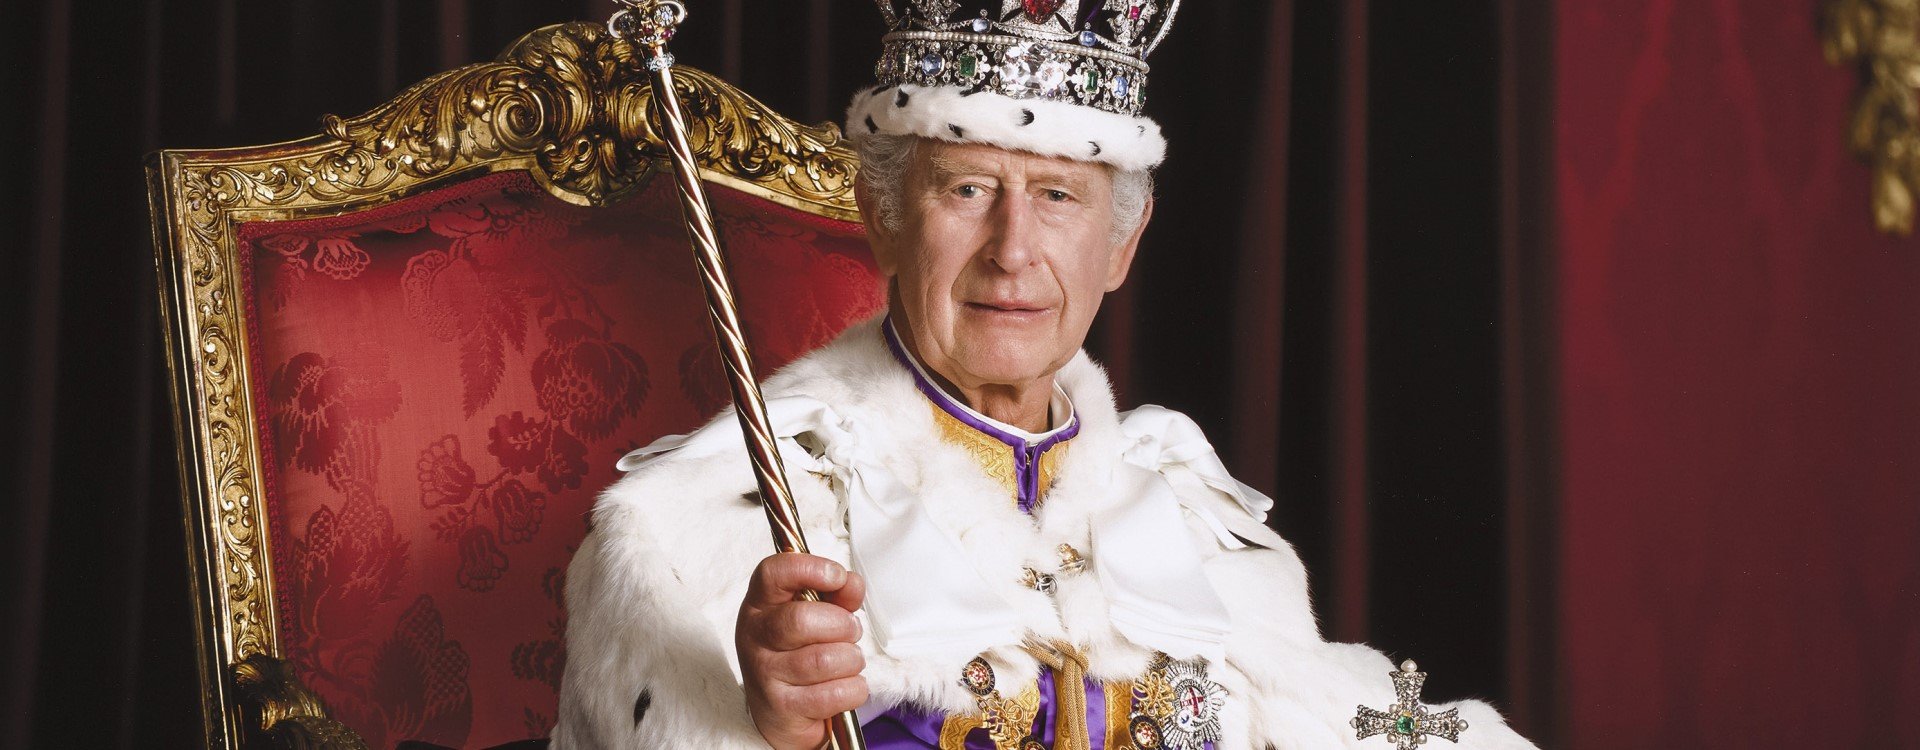 His Majesty King Charles III on Coronation Day